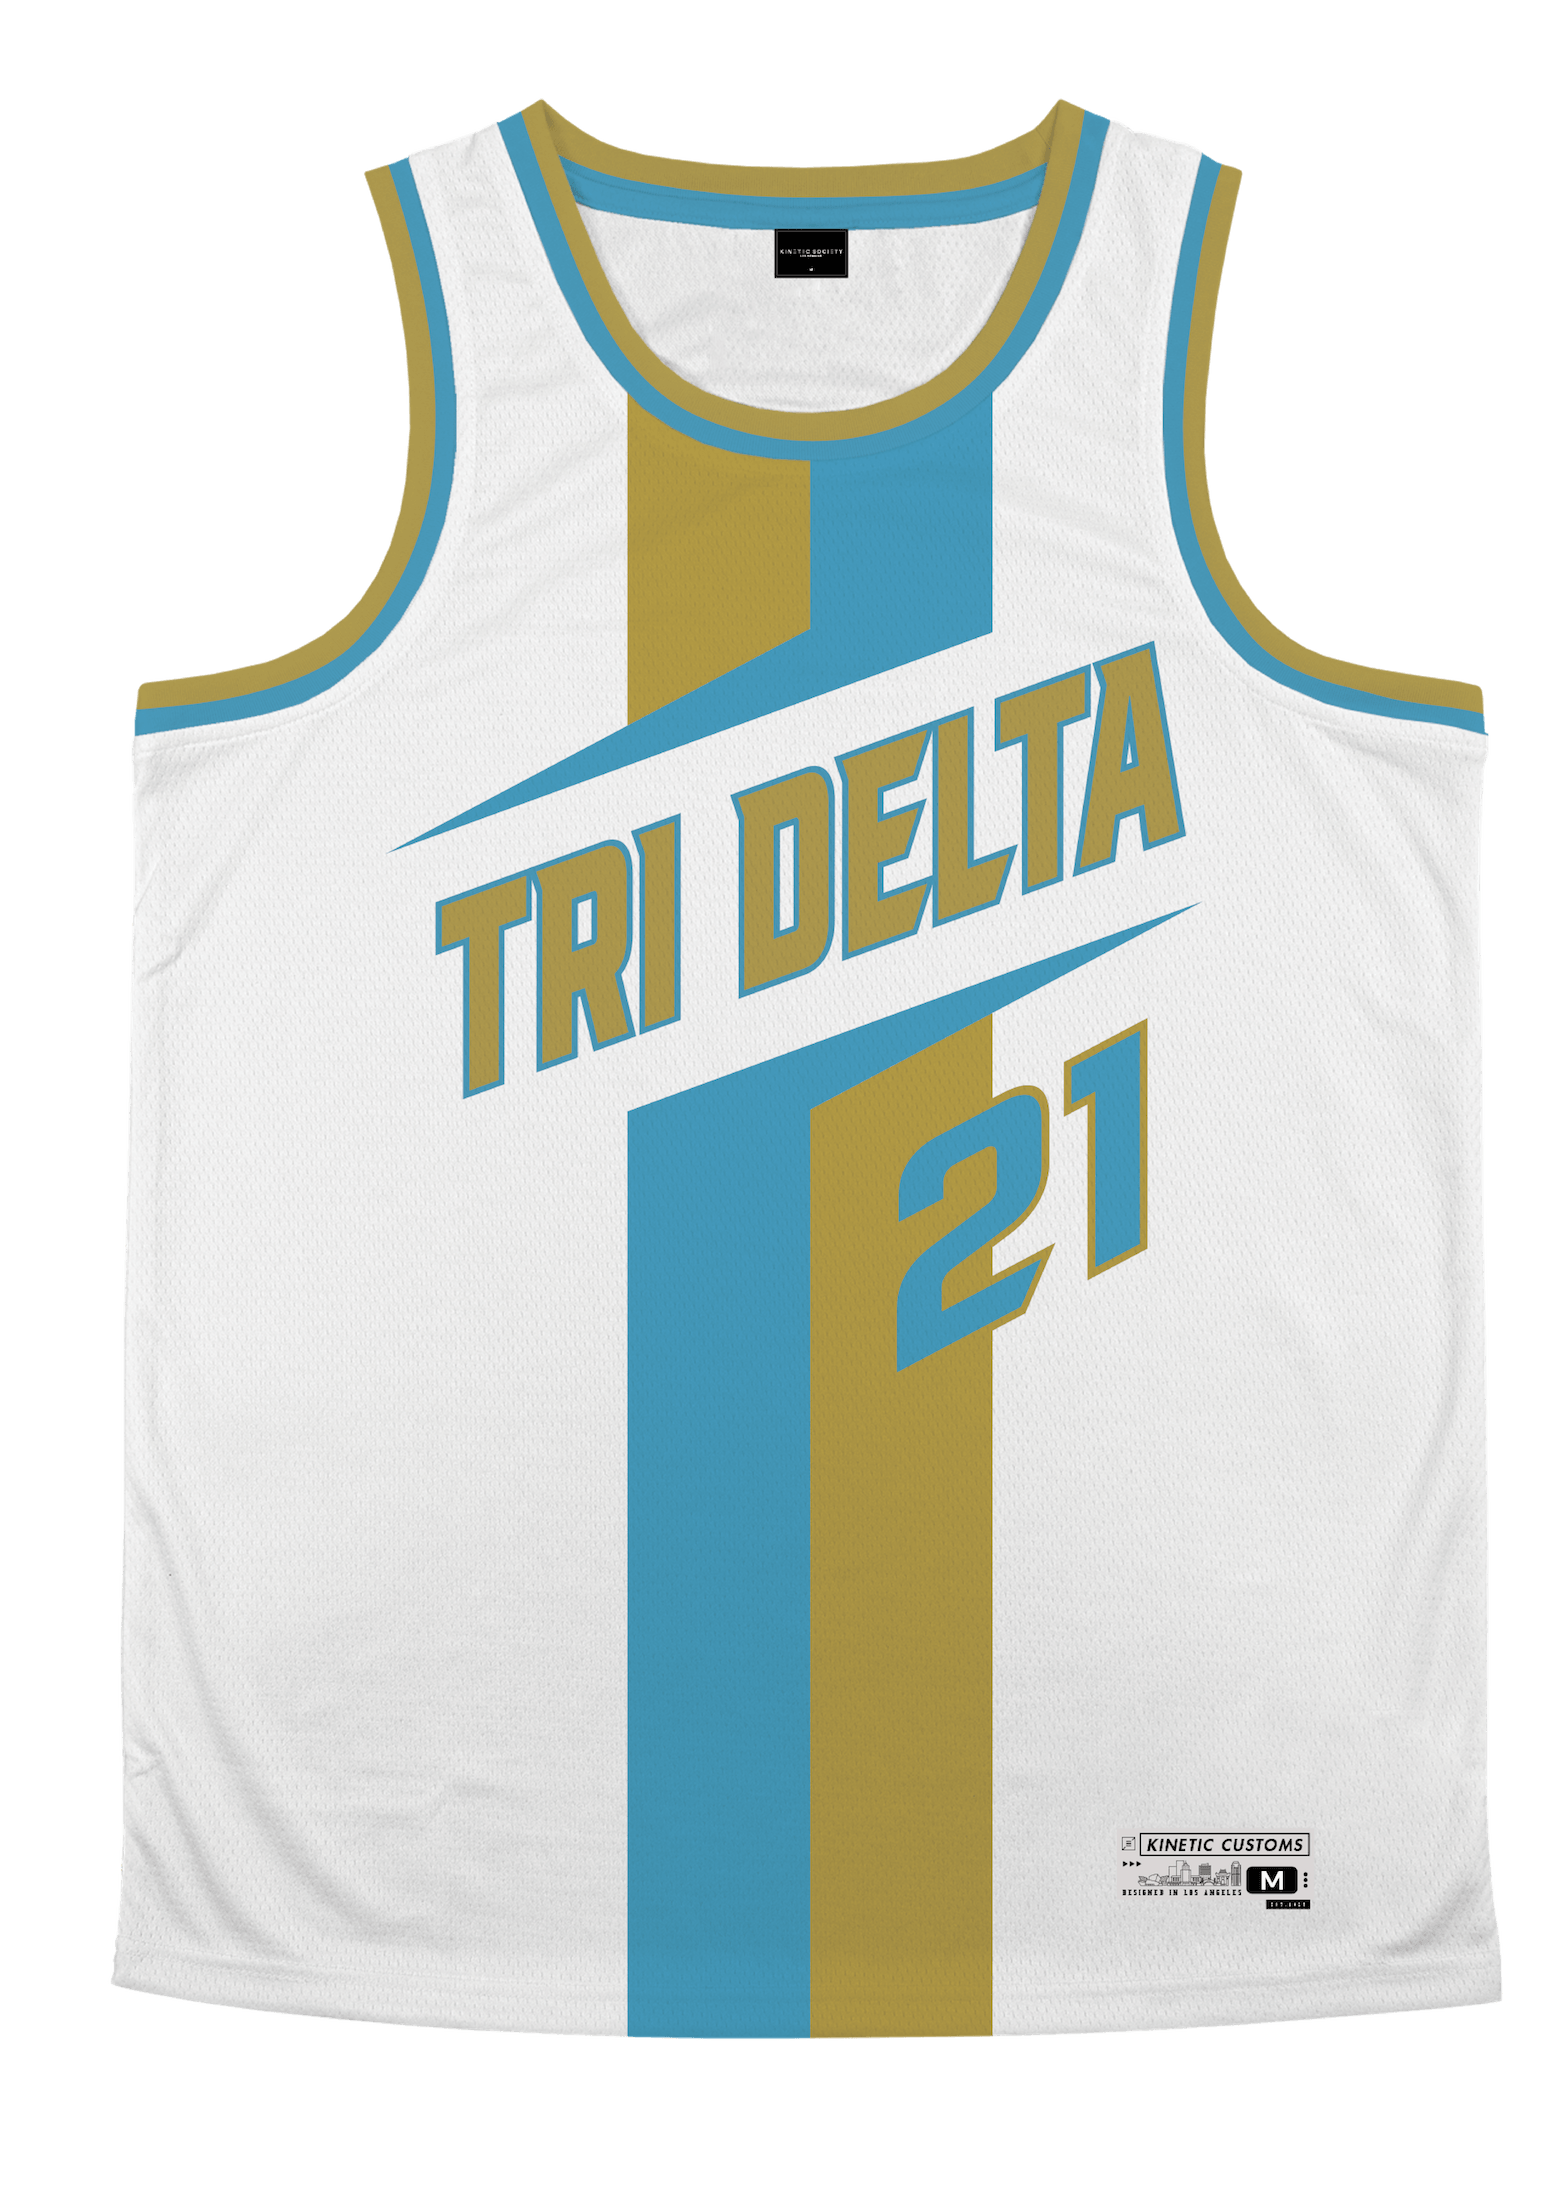 DELTA DELTA DELTA - Middle Child Basketball Jersey Premium Basketball Kinetic Society LLC 